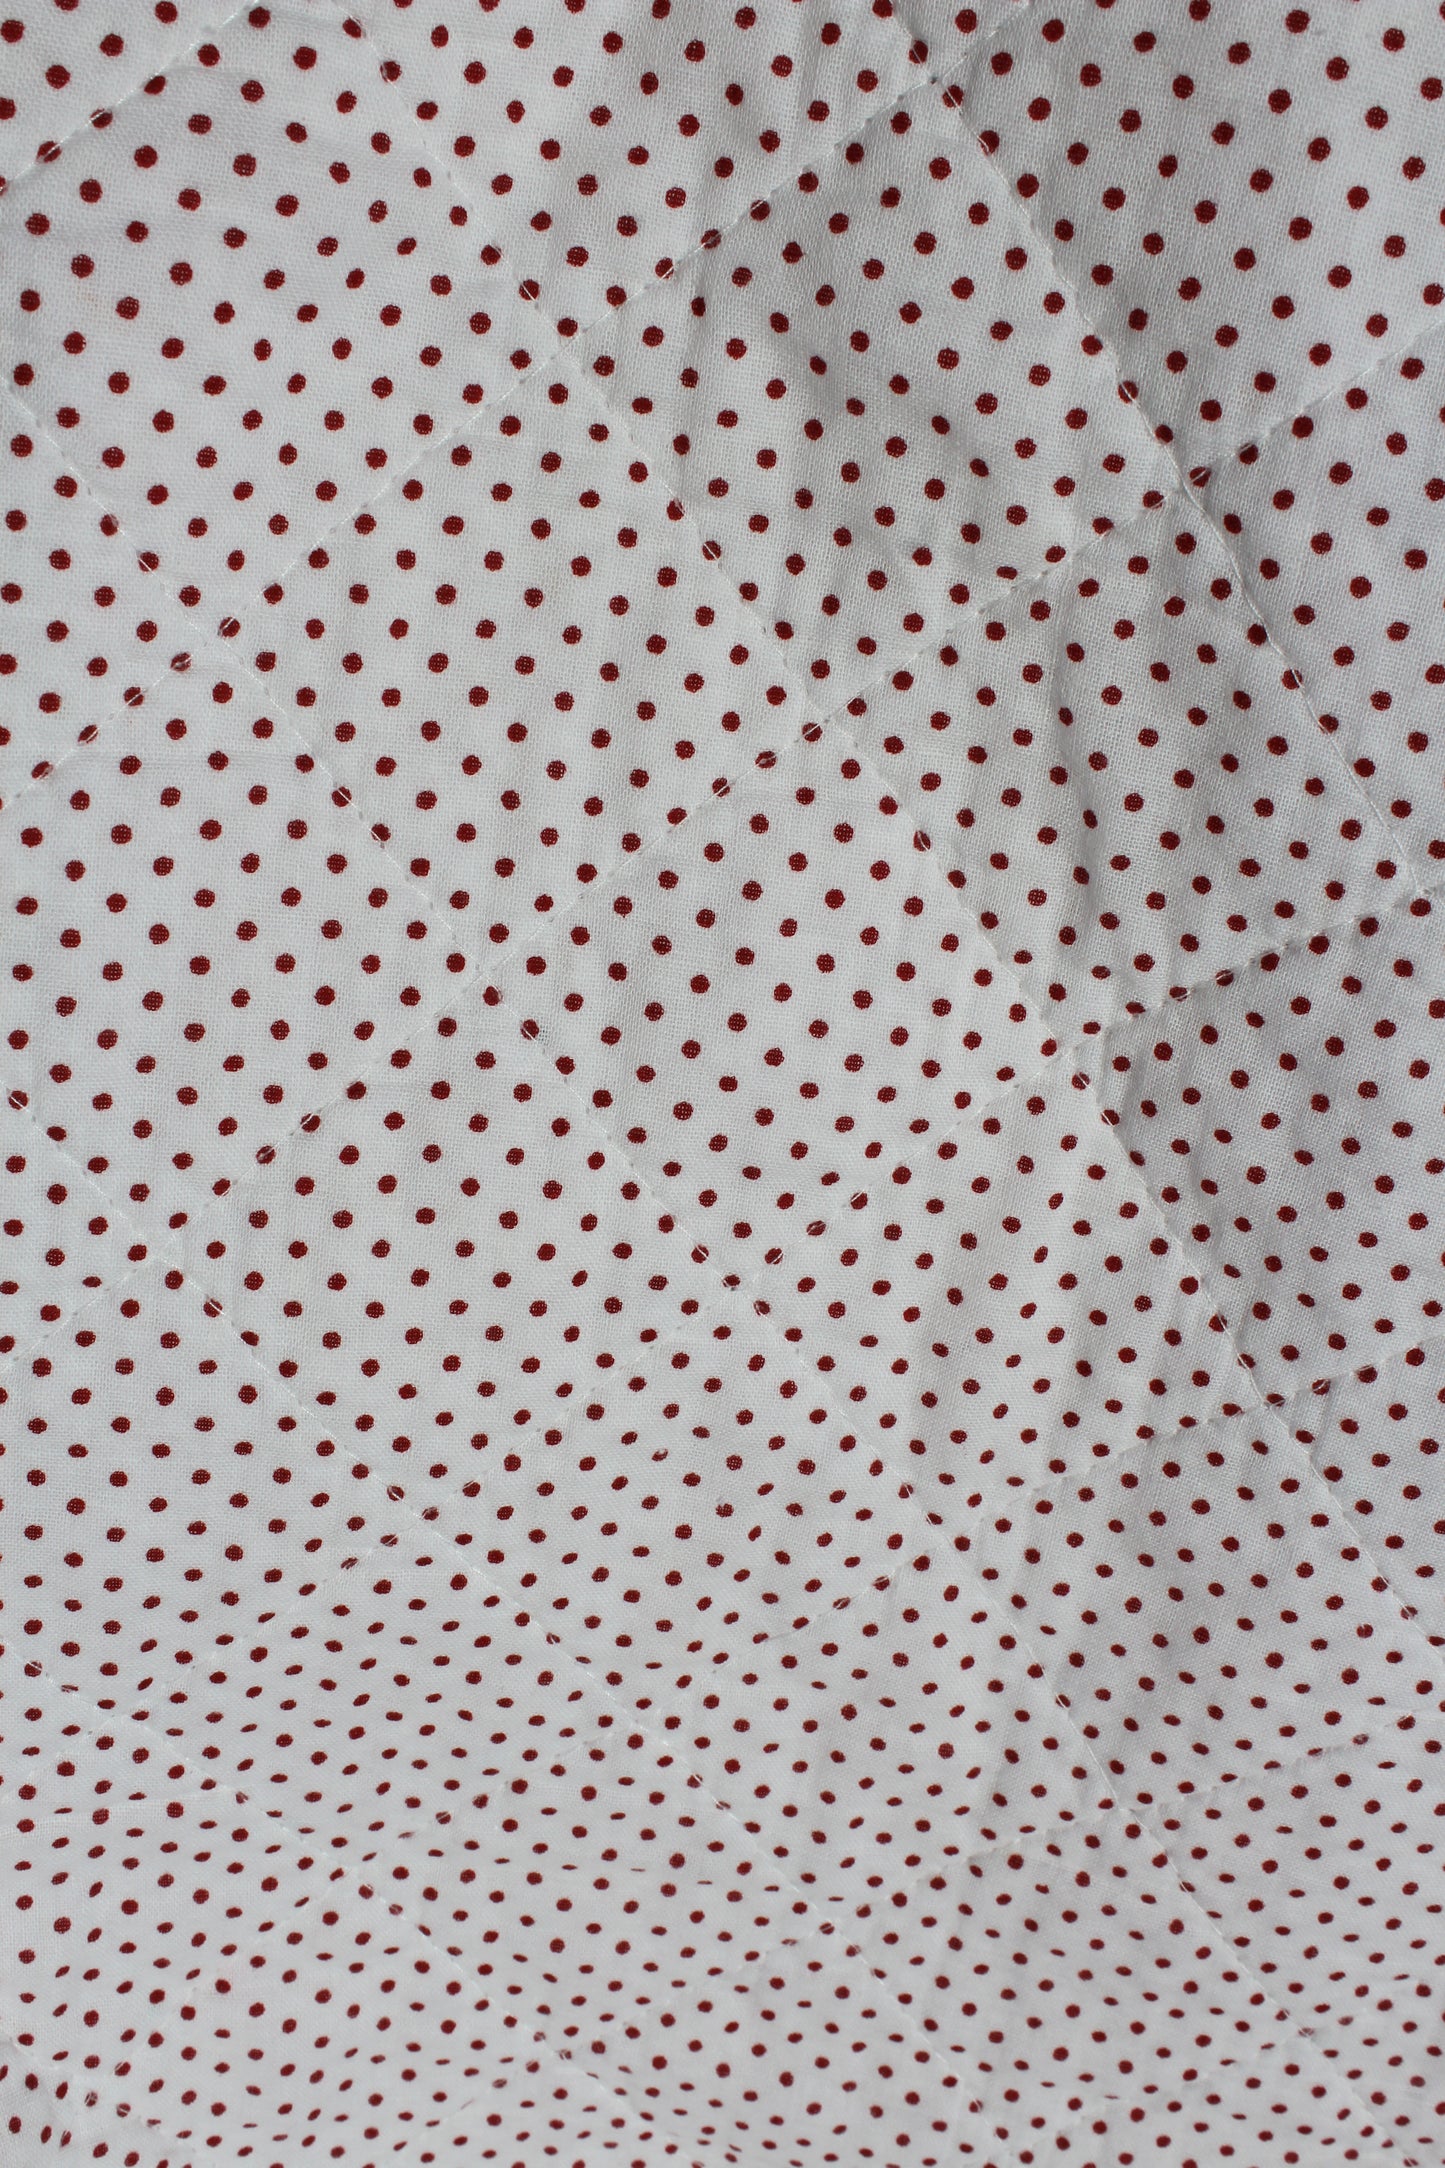 Ib Laursen - Quilt vattæppe - råhvid med røde prikker